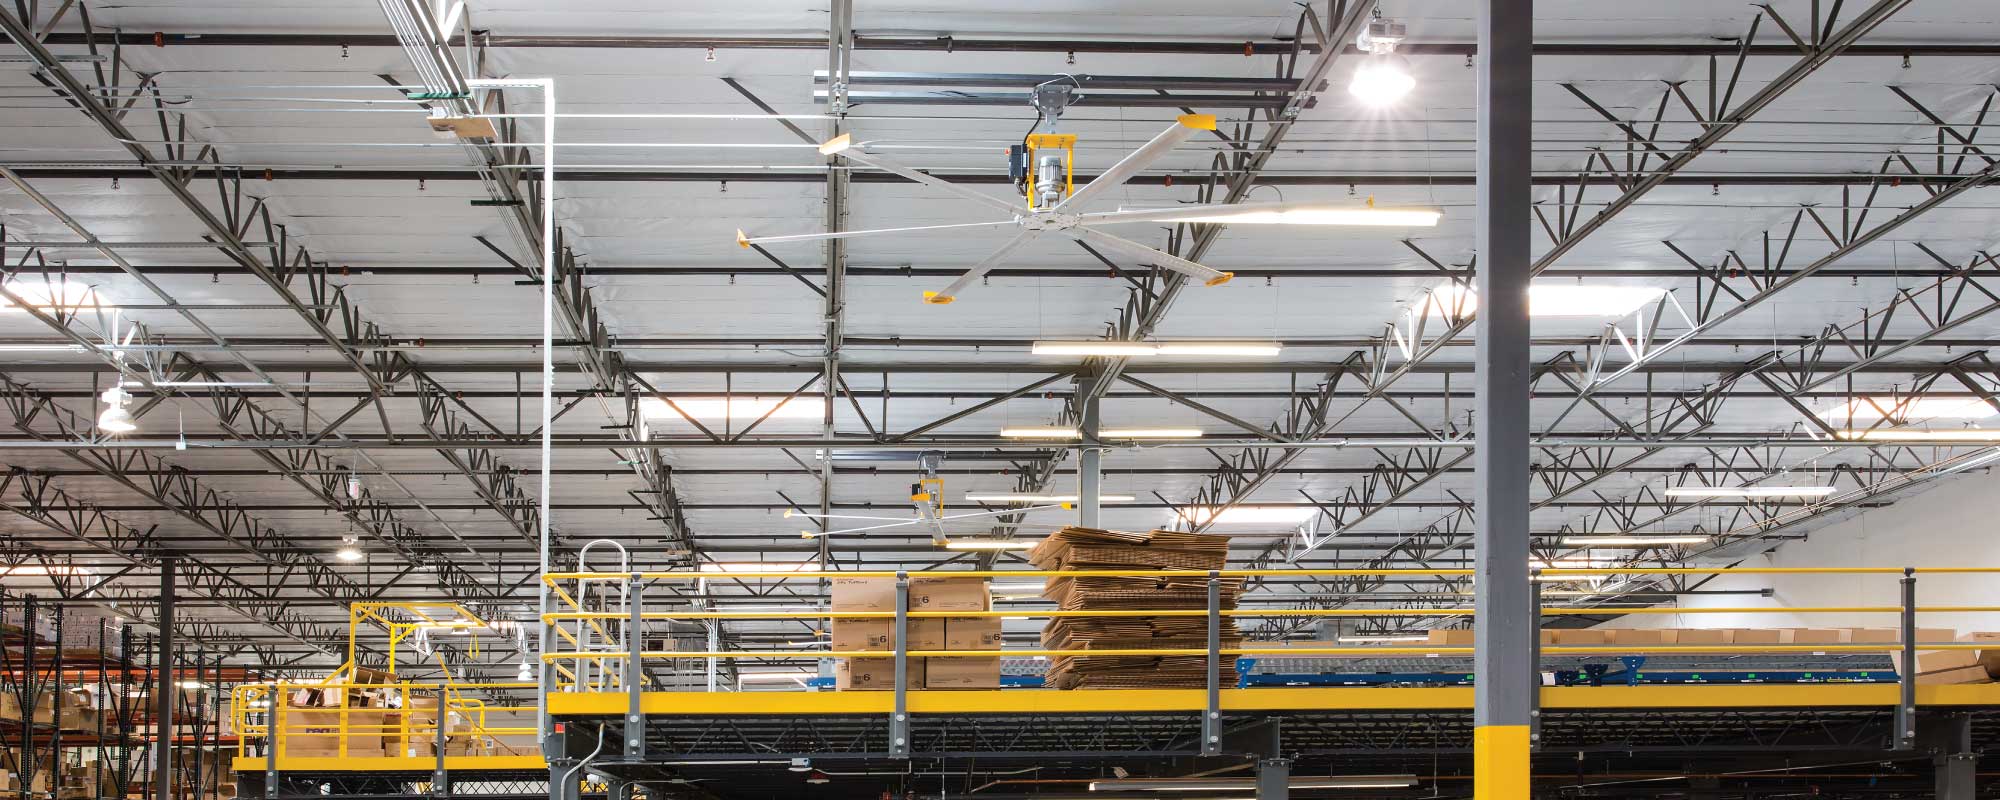 warehouse ceiling fans